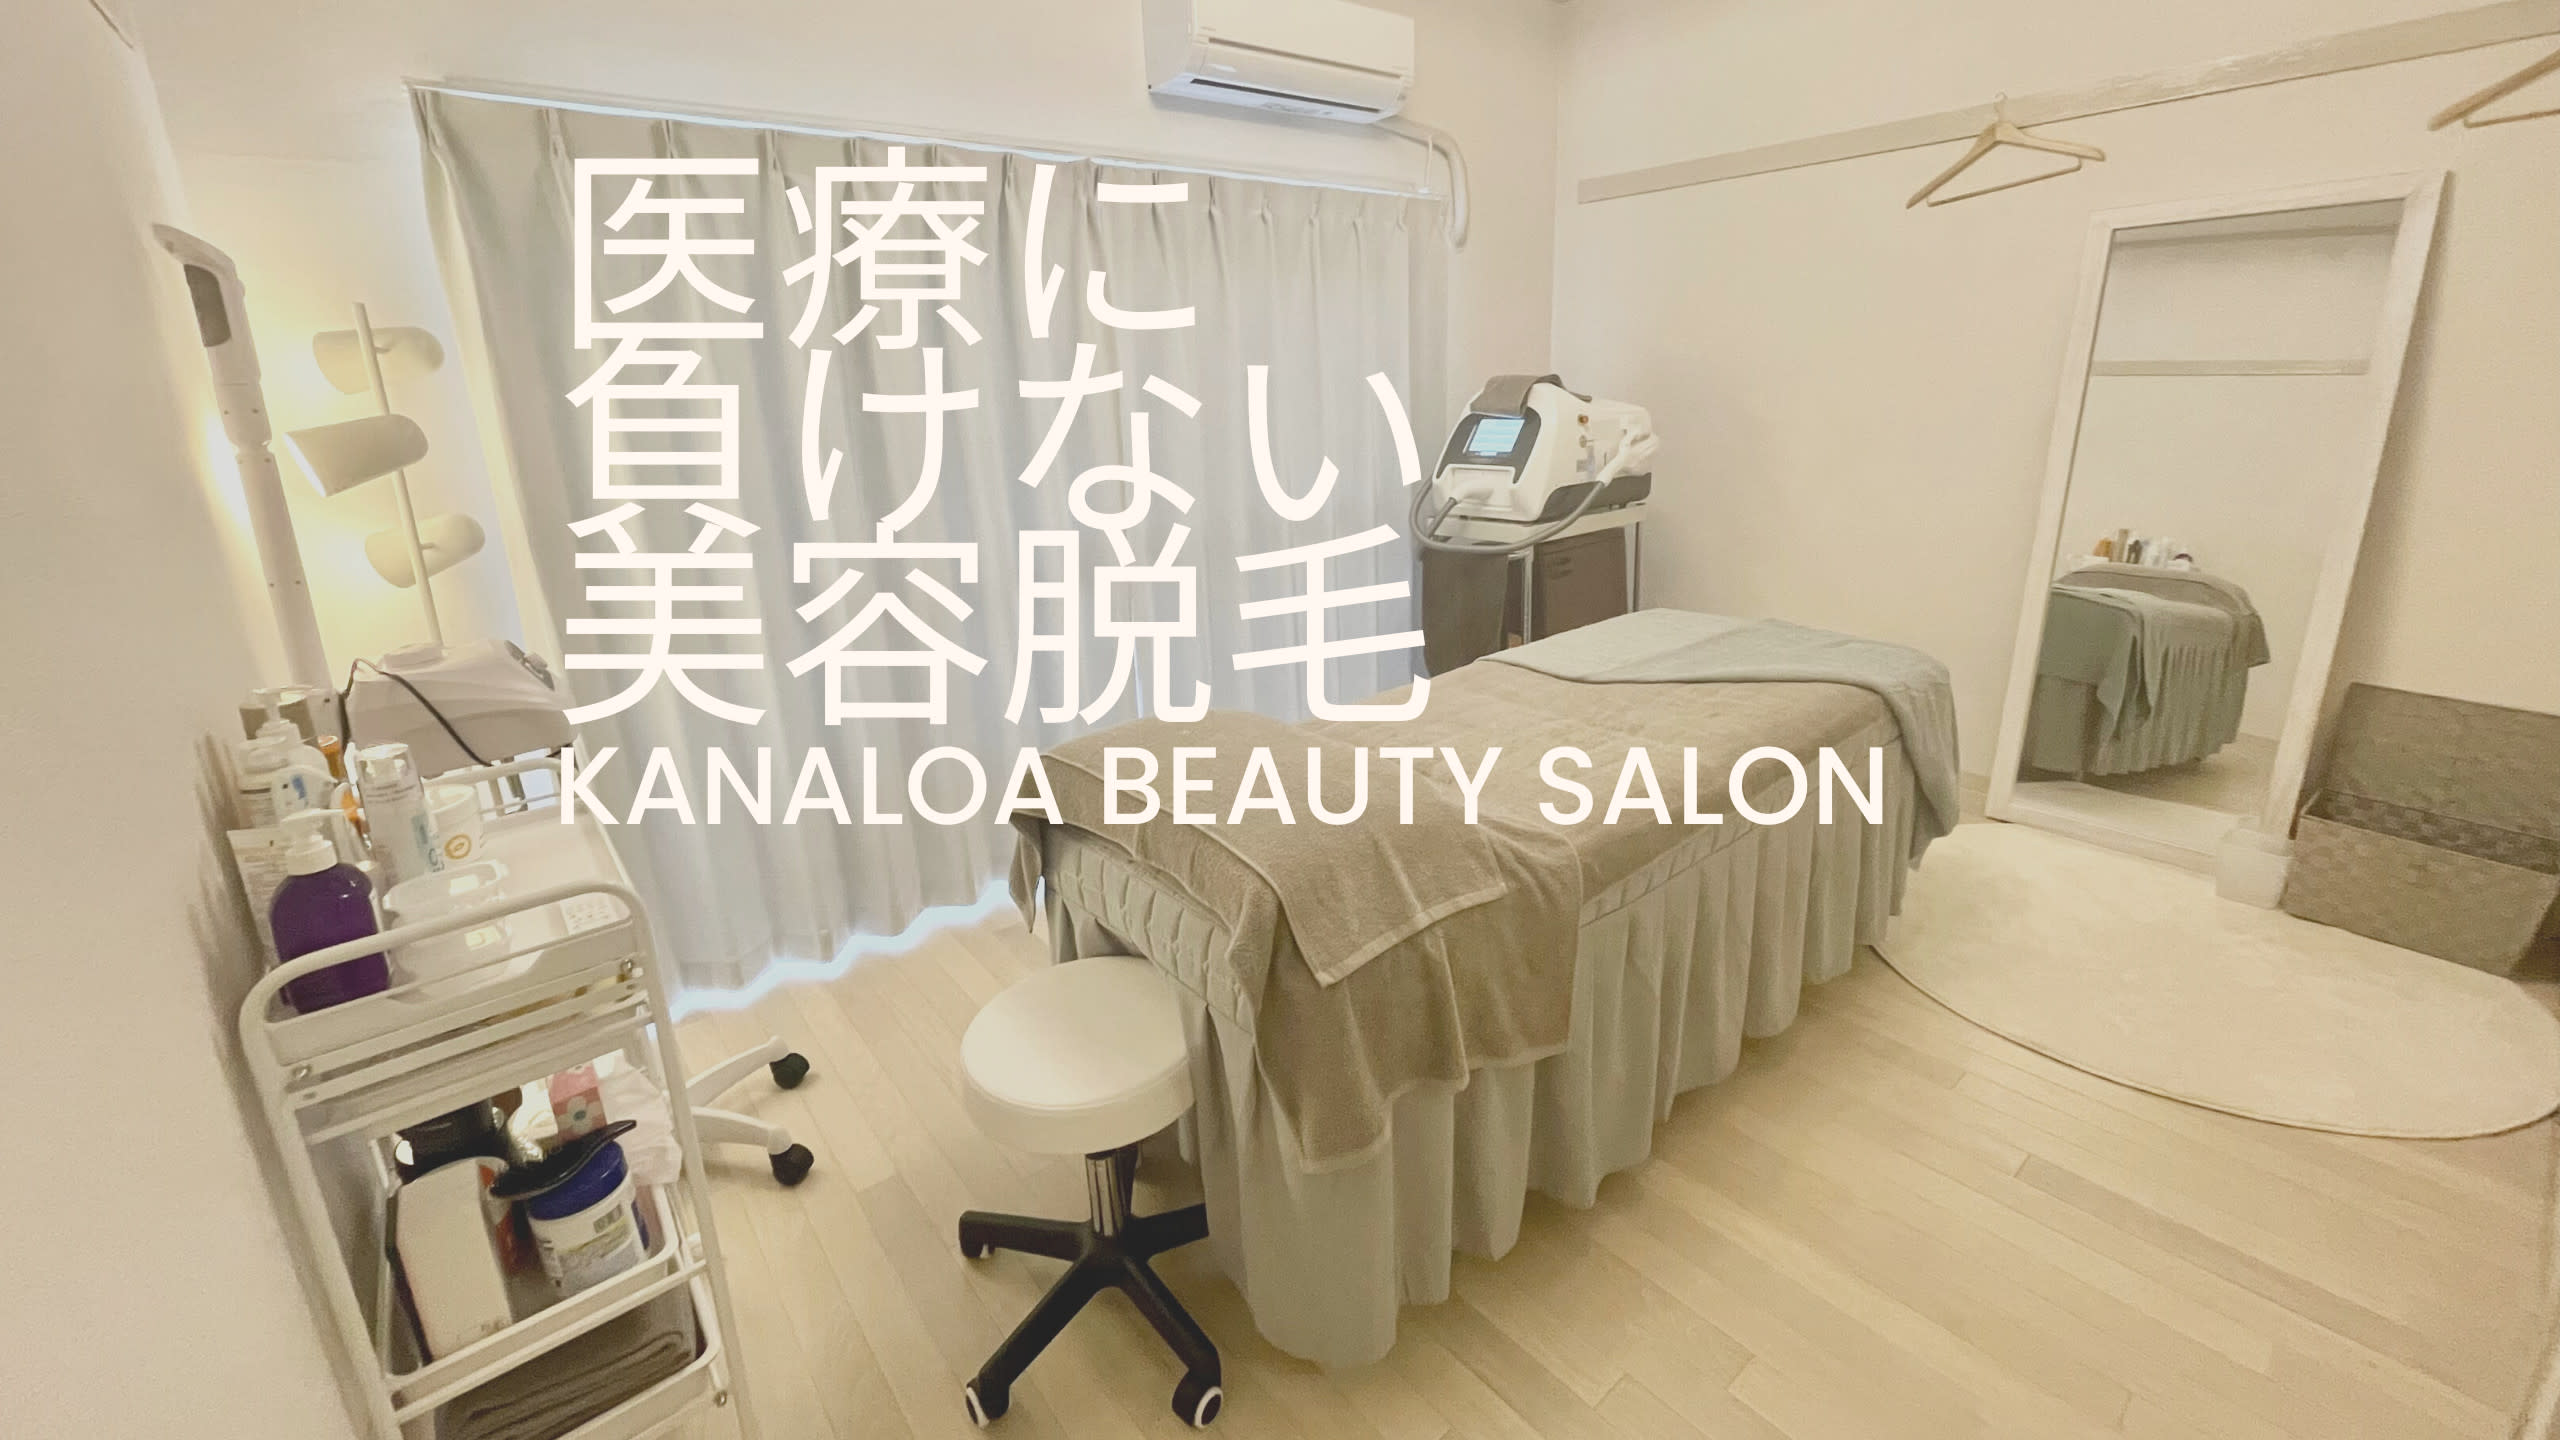 Kanaloa beauty salon 脱毛・フェイシャルのアイキャッチ画像